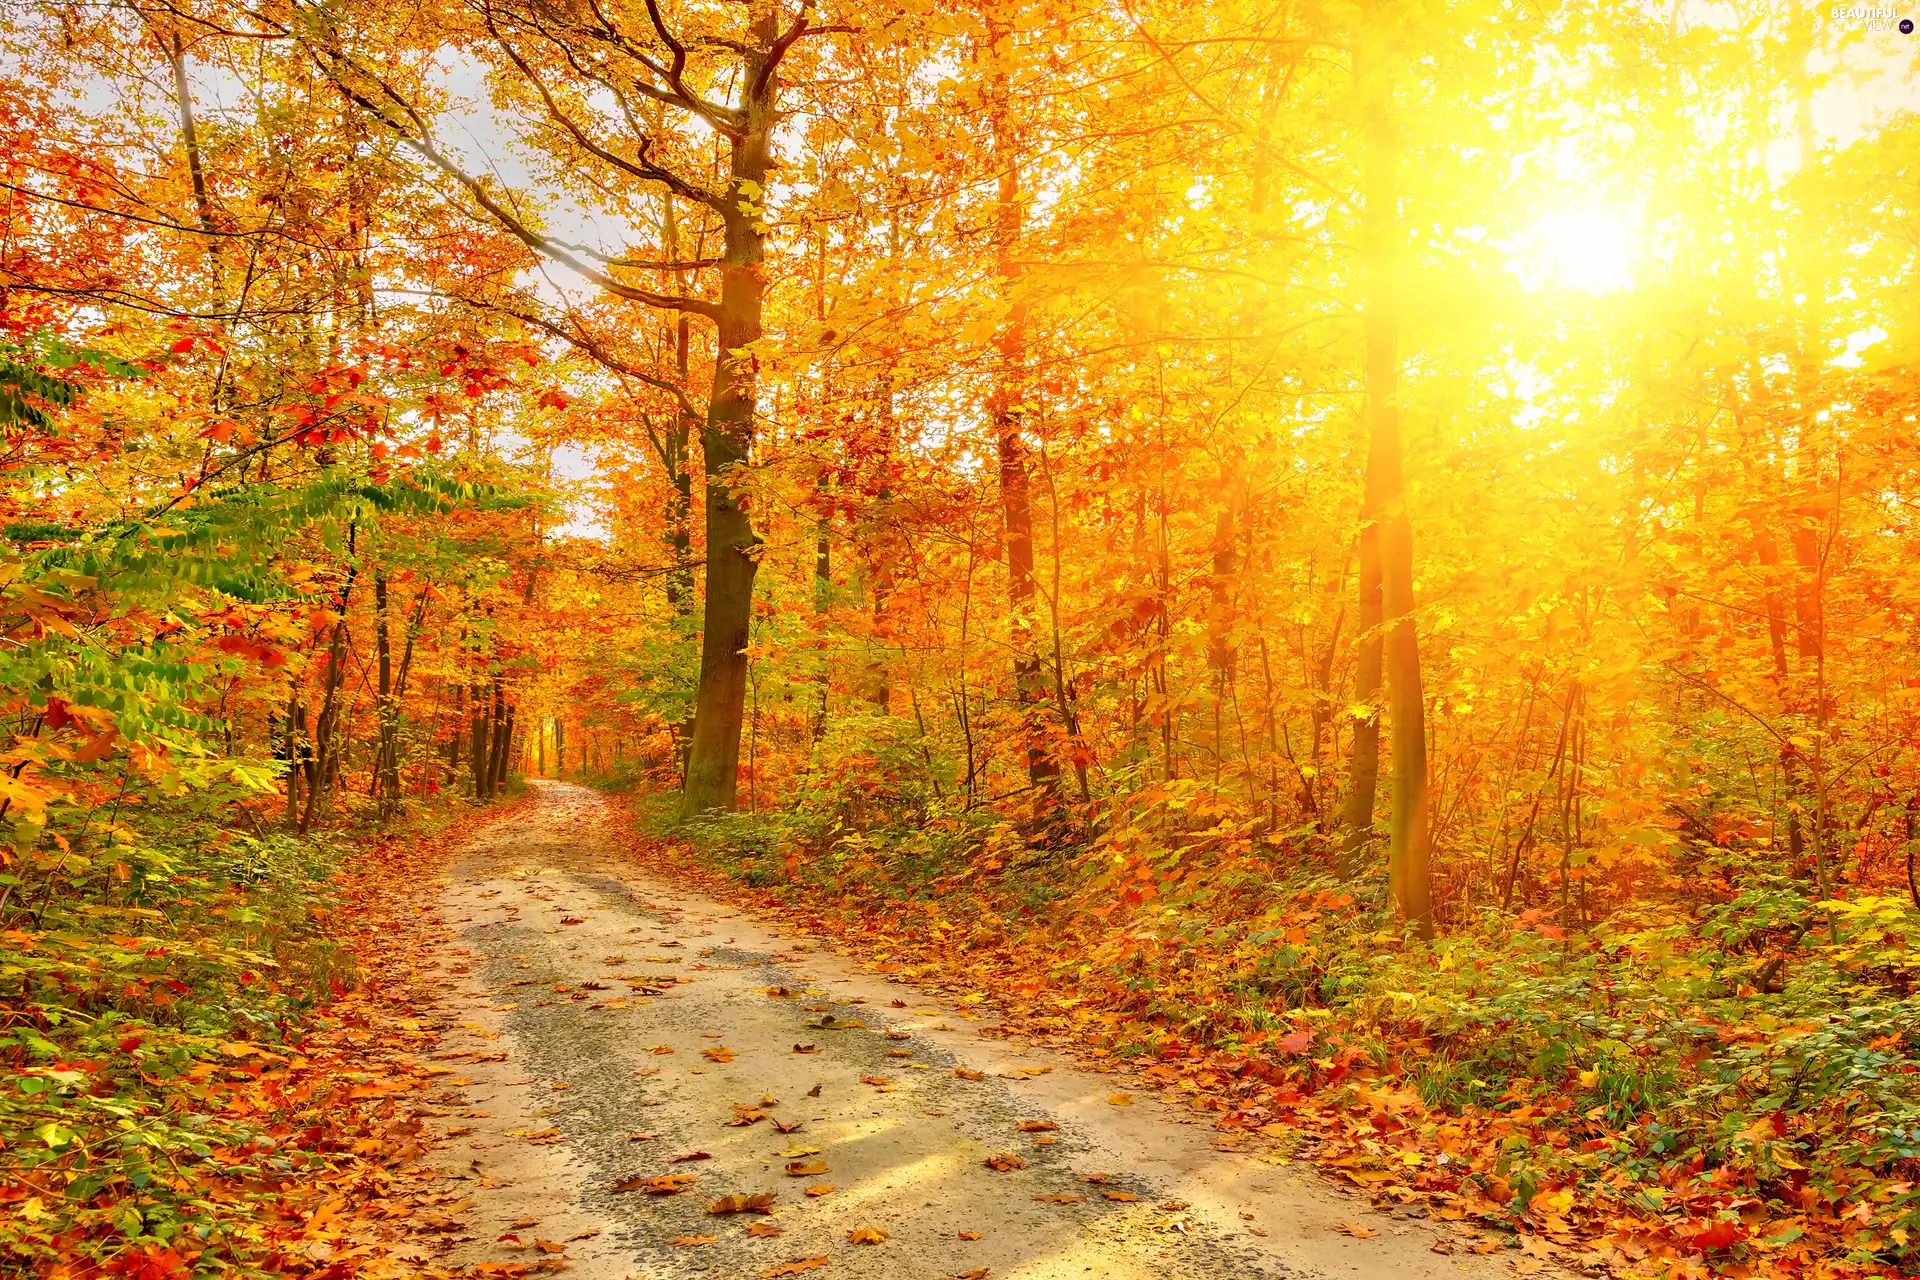 autumn, Path, light breaking through sky, forest